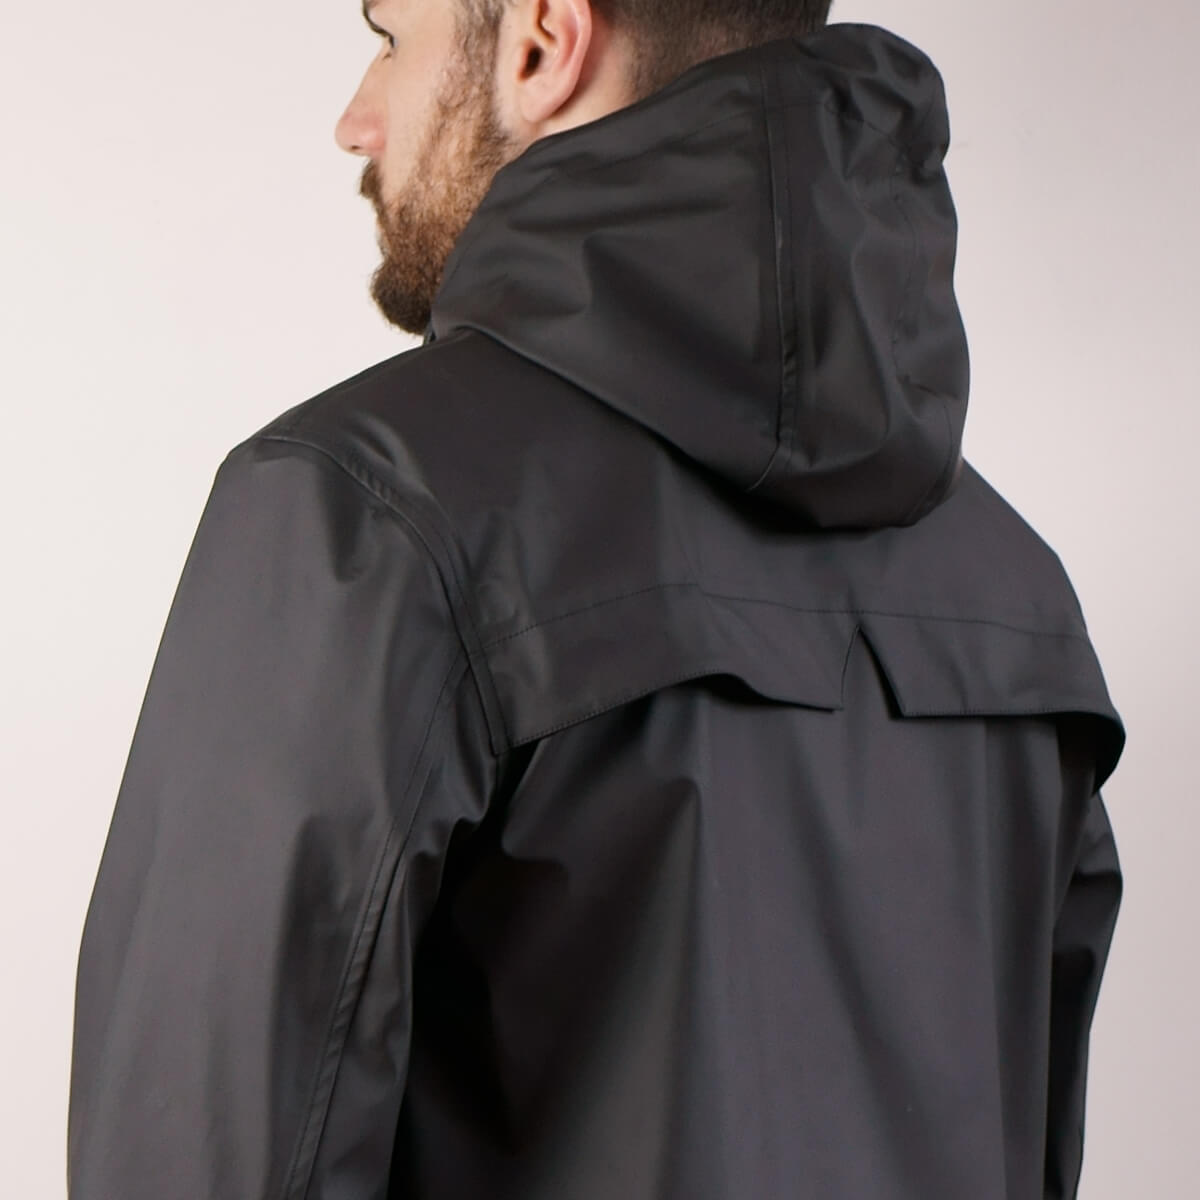 Long Rain Jacket With Waterproof PU Coating And Heat-sealed Seams